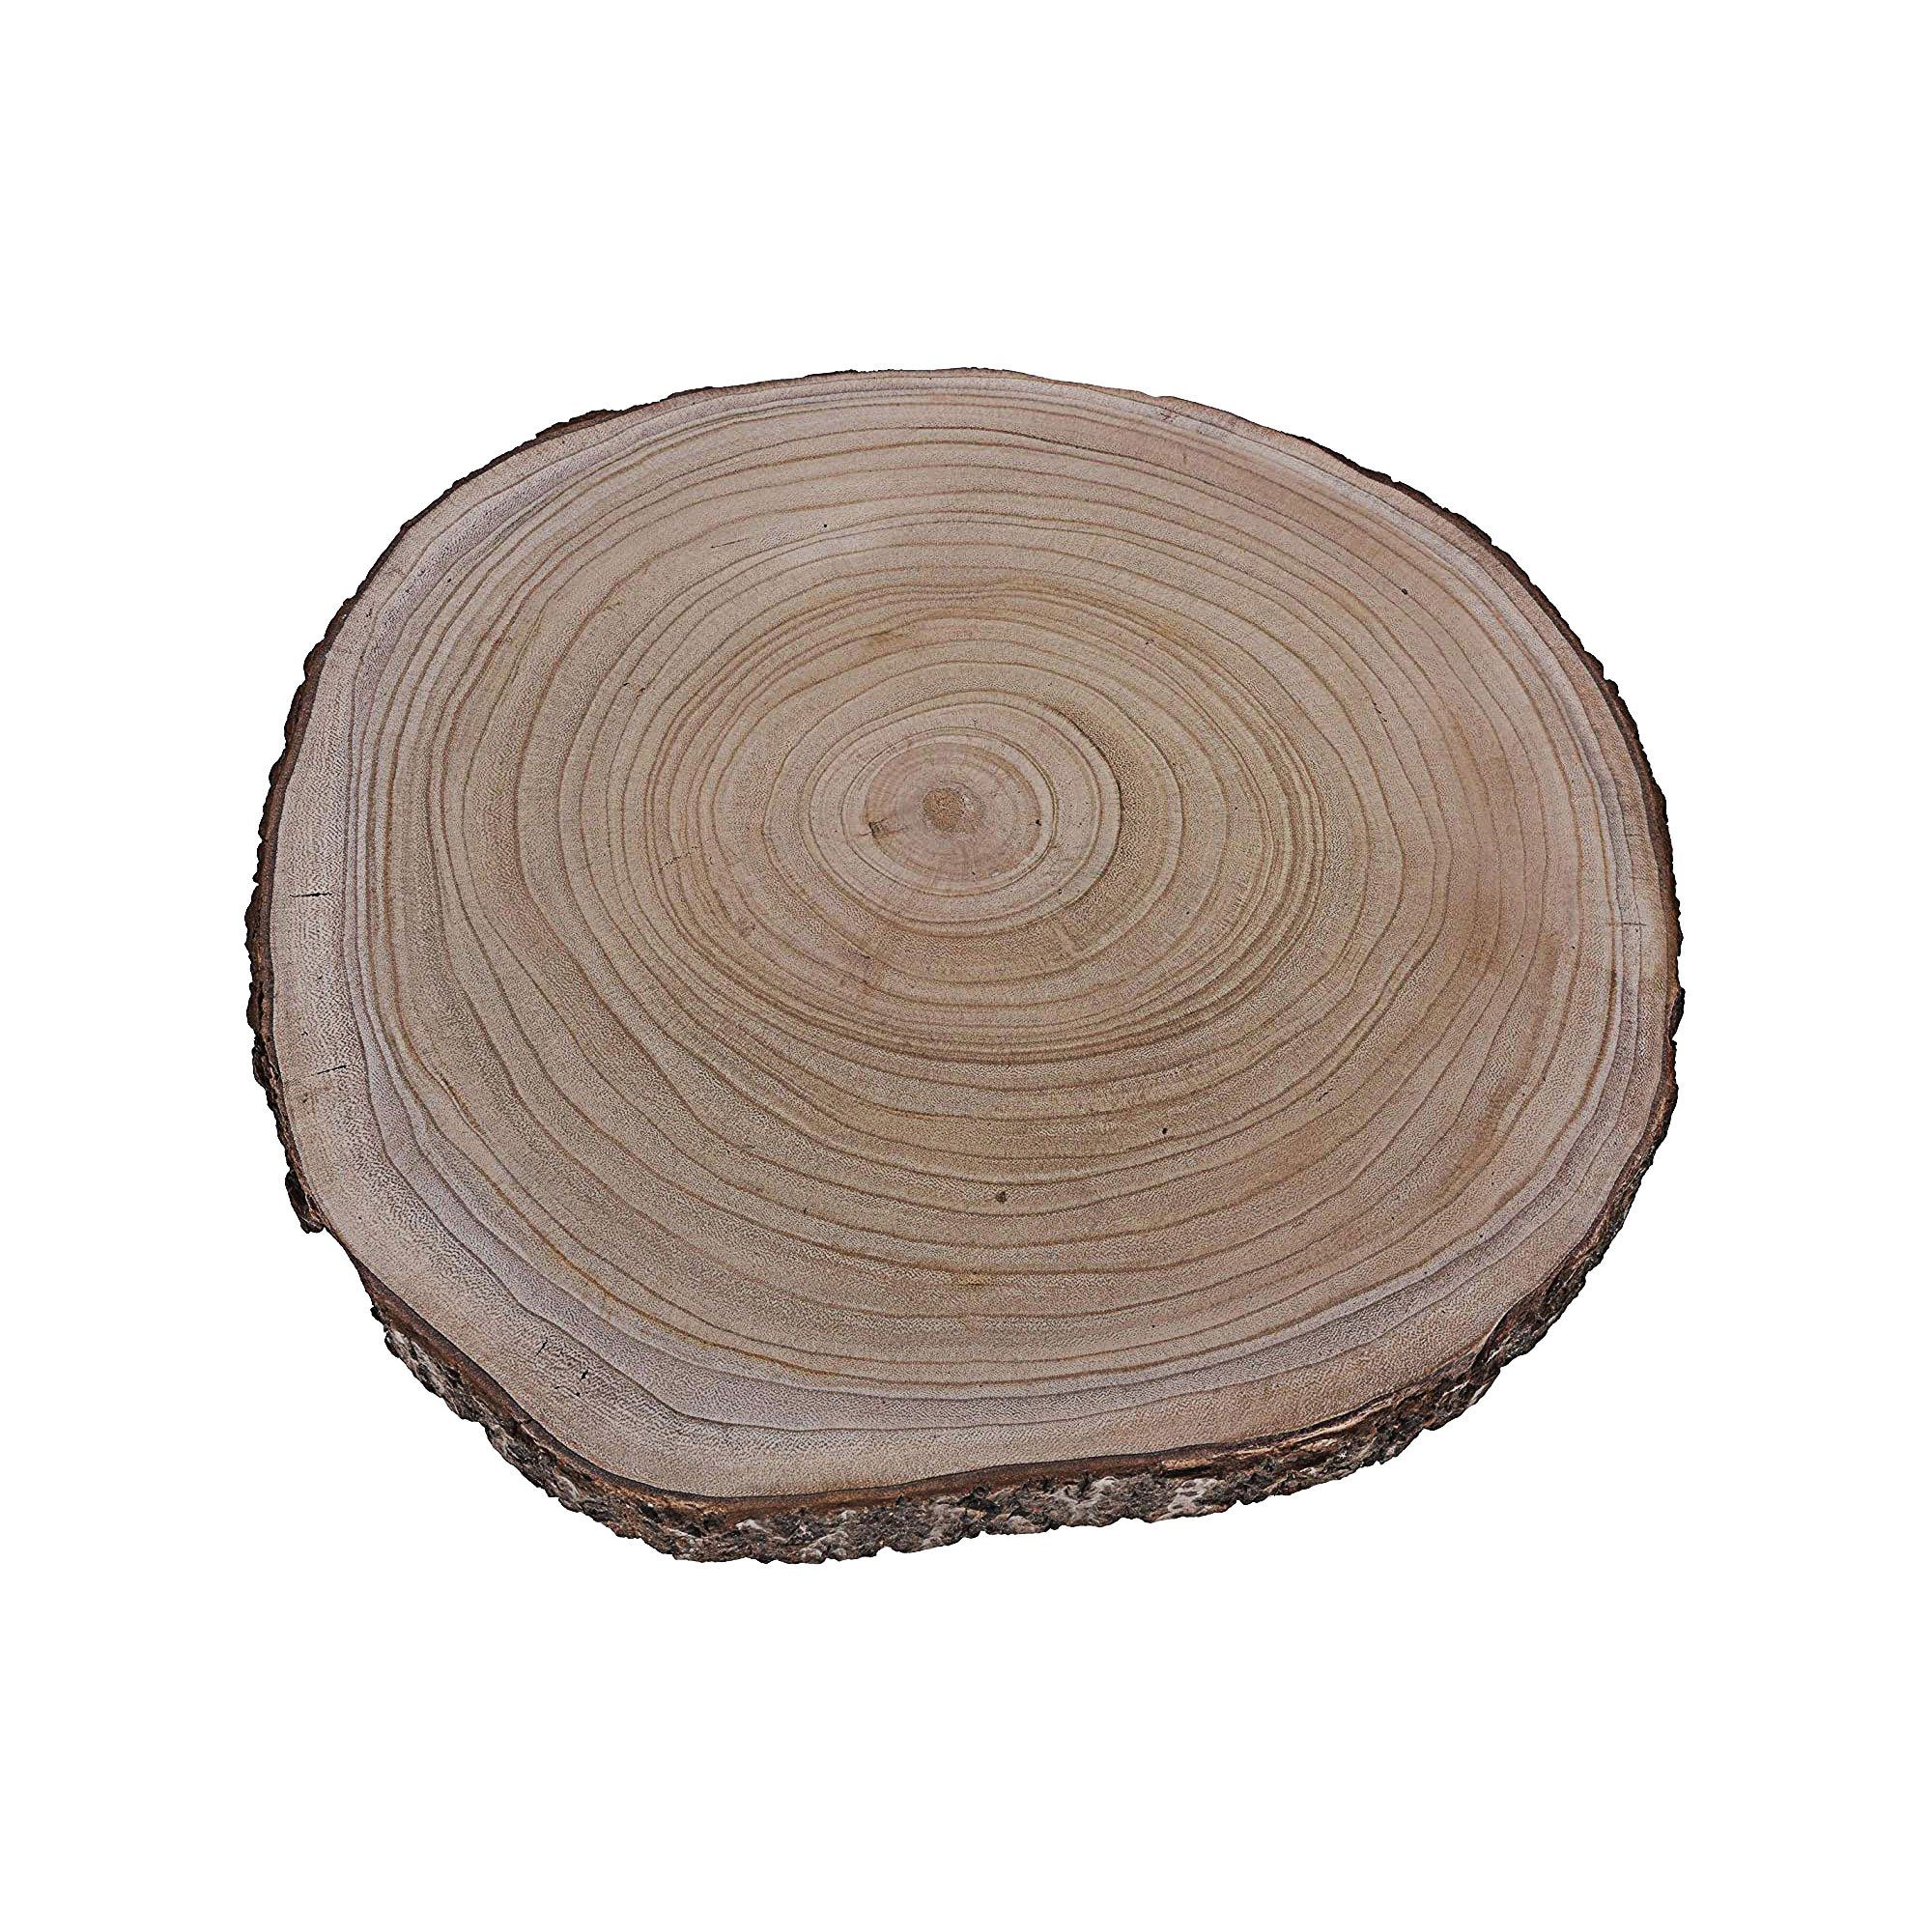 Holzplatte CEPEWA Paulownia 44,5x2,5cm Holzscheibe Dekoschale Baumscheibe Holzmaserung